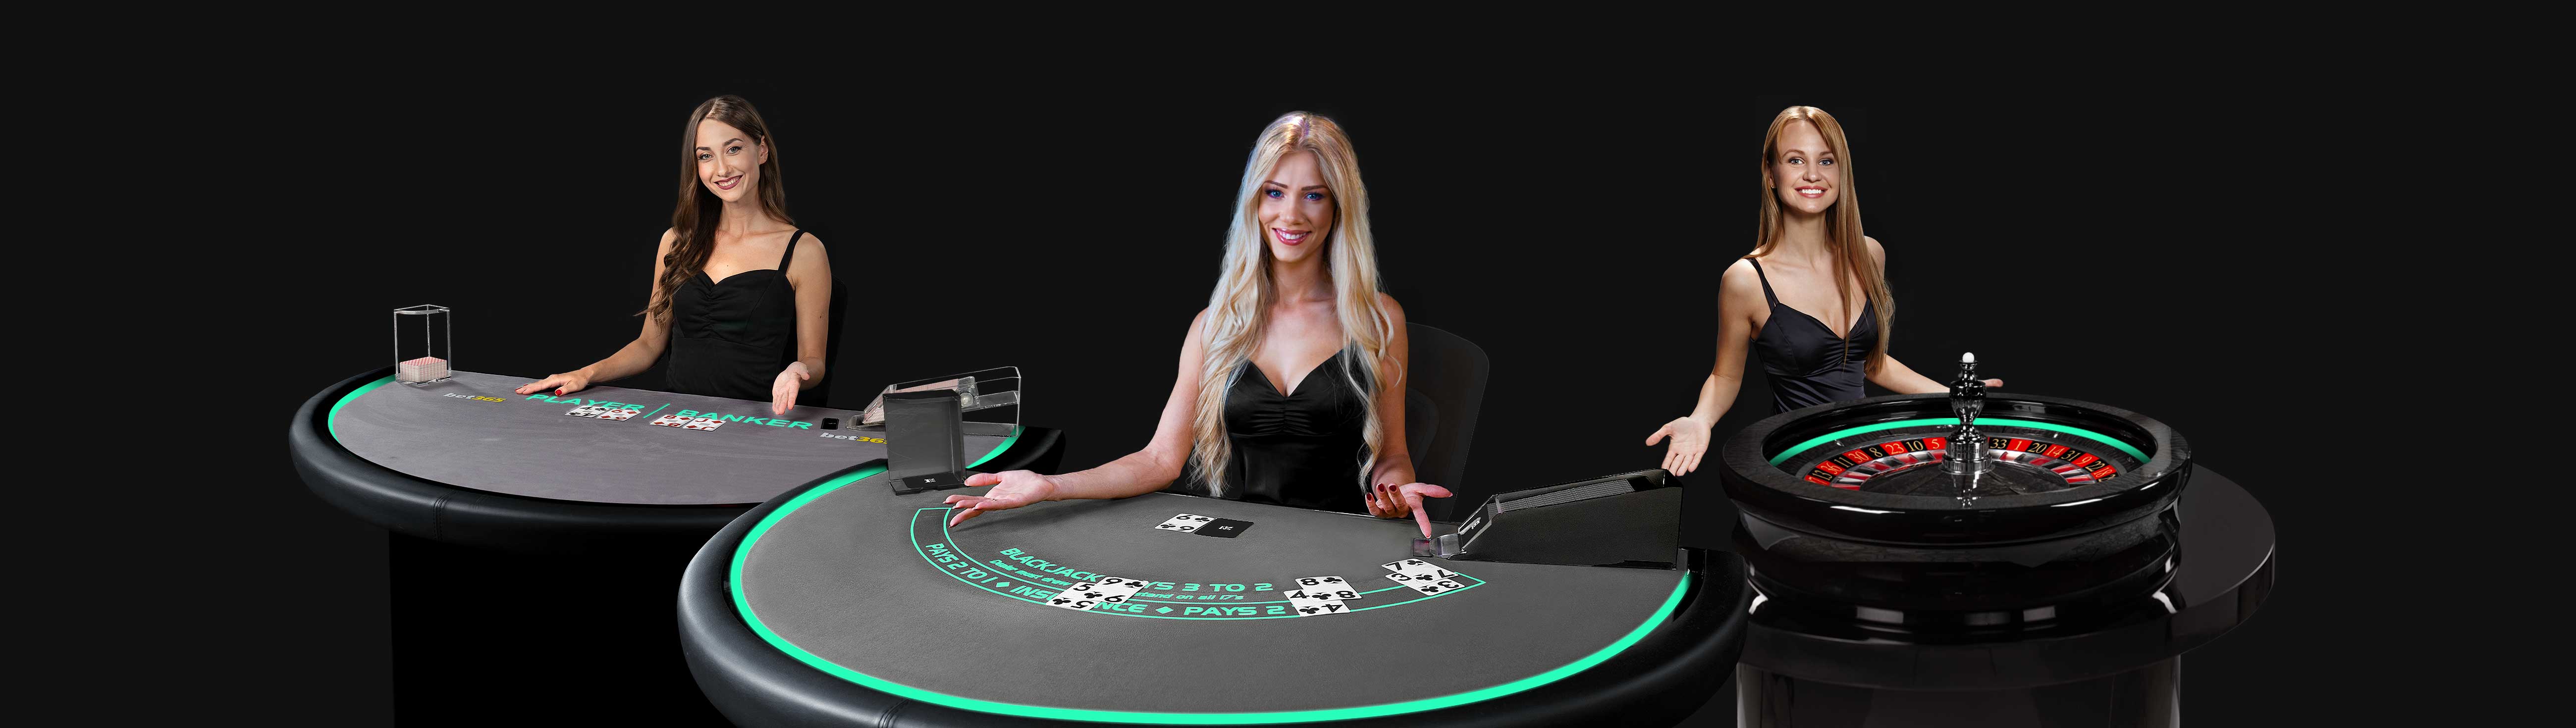 Casino Online | Blackjack, Roleta e Slots | bet365